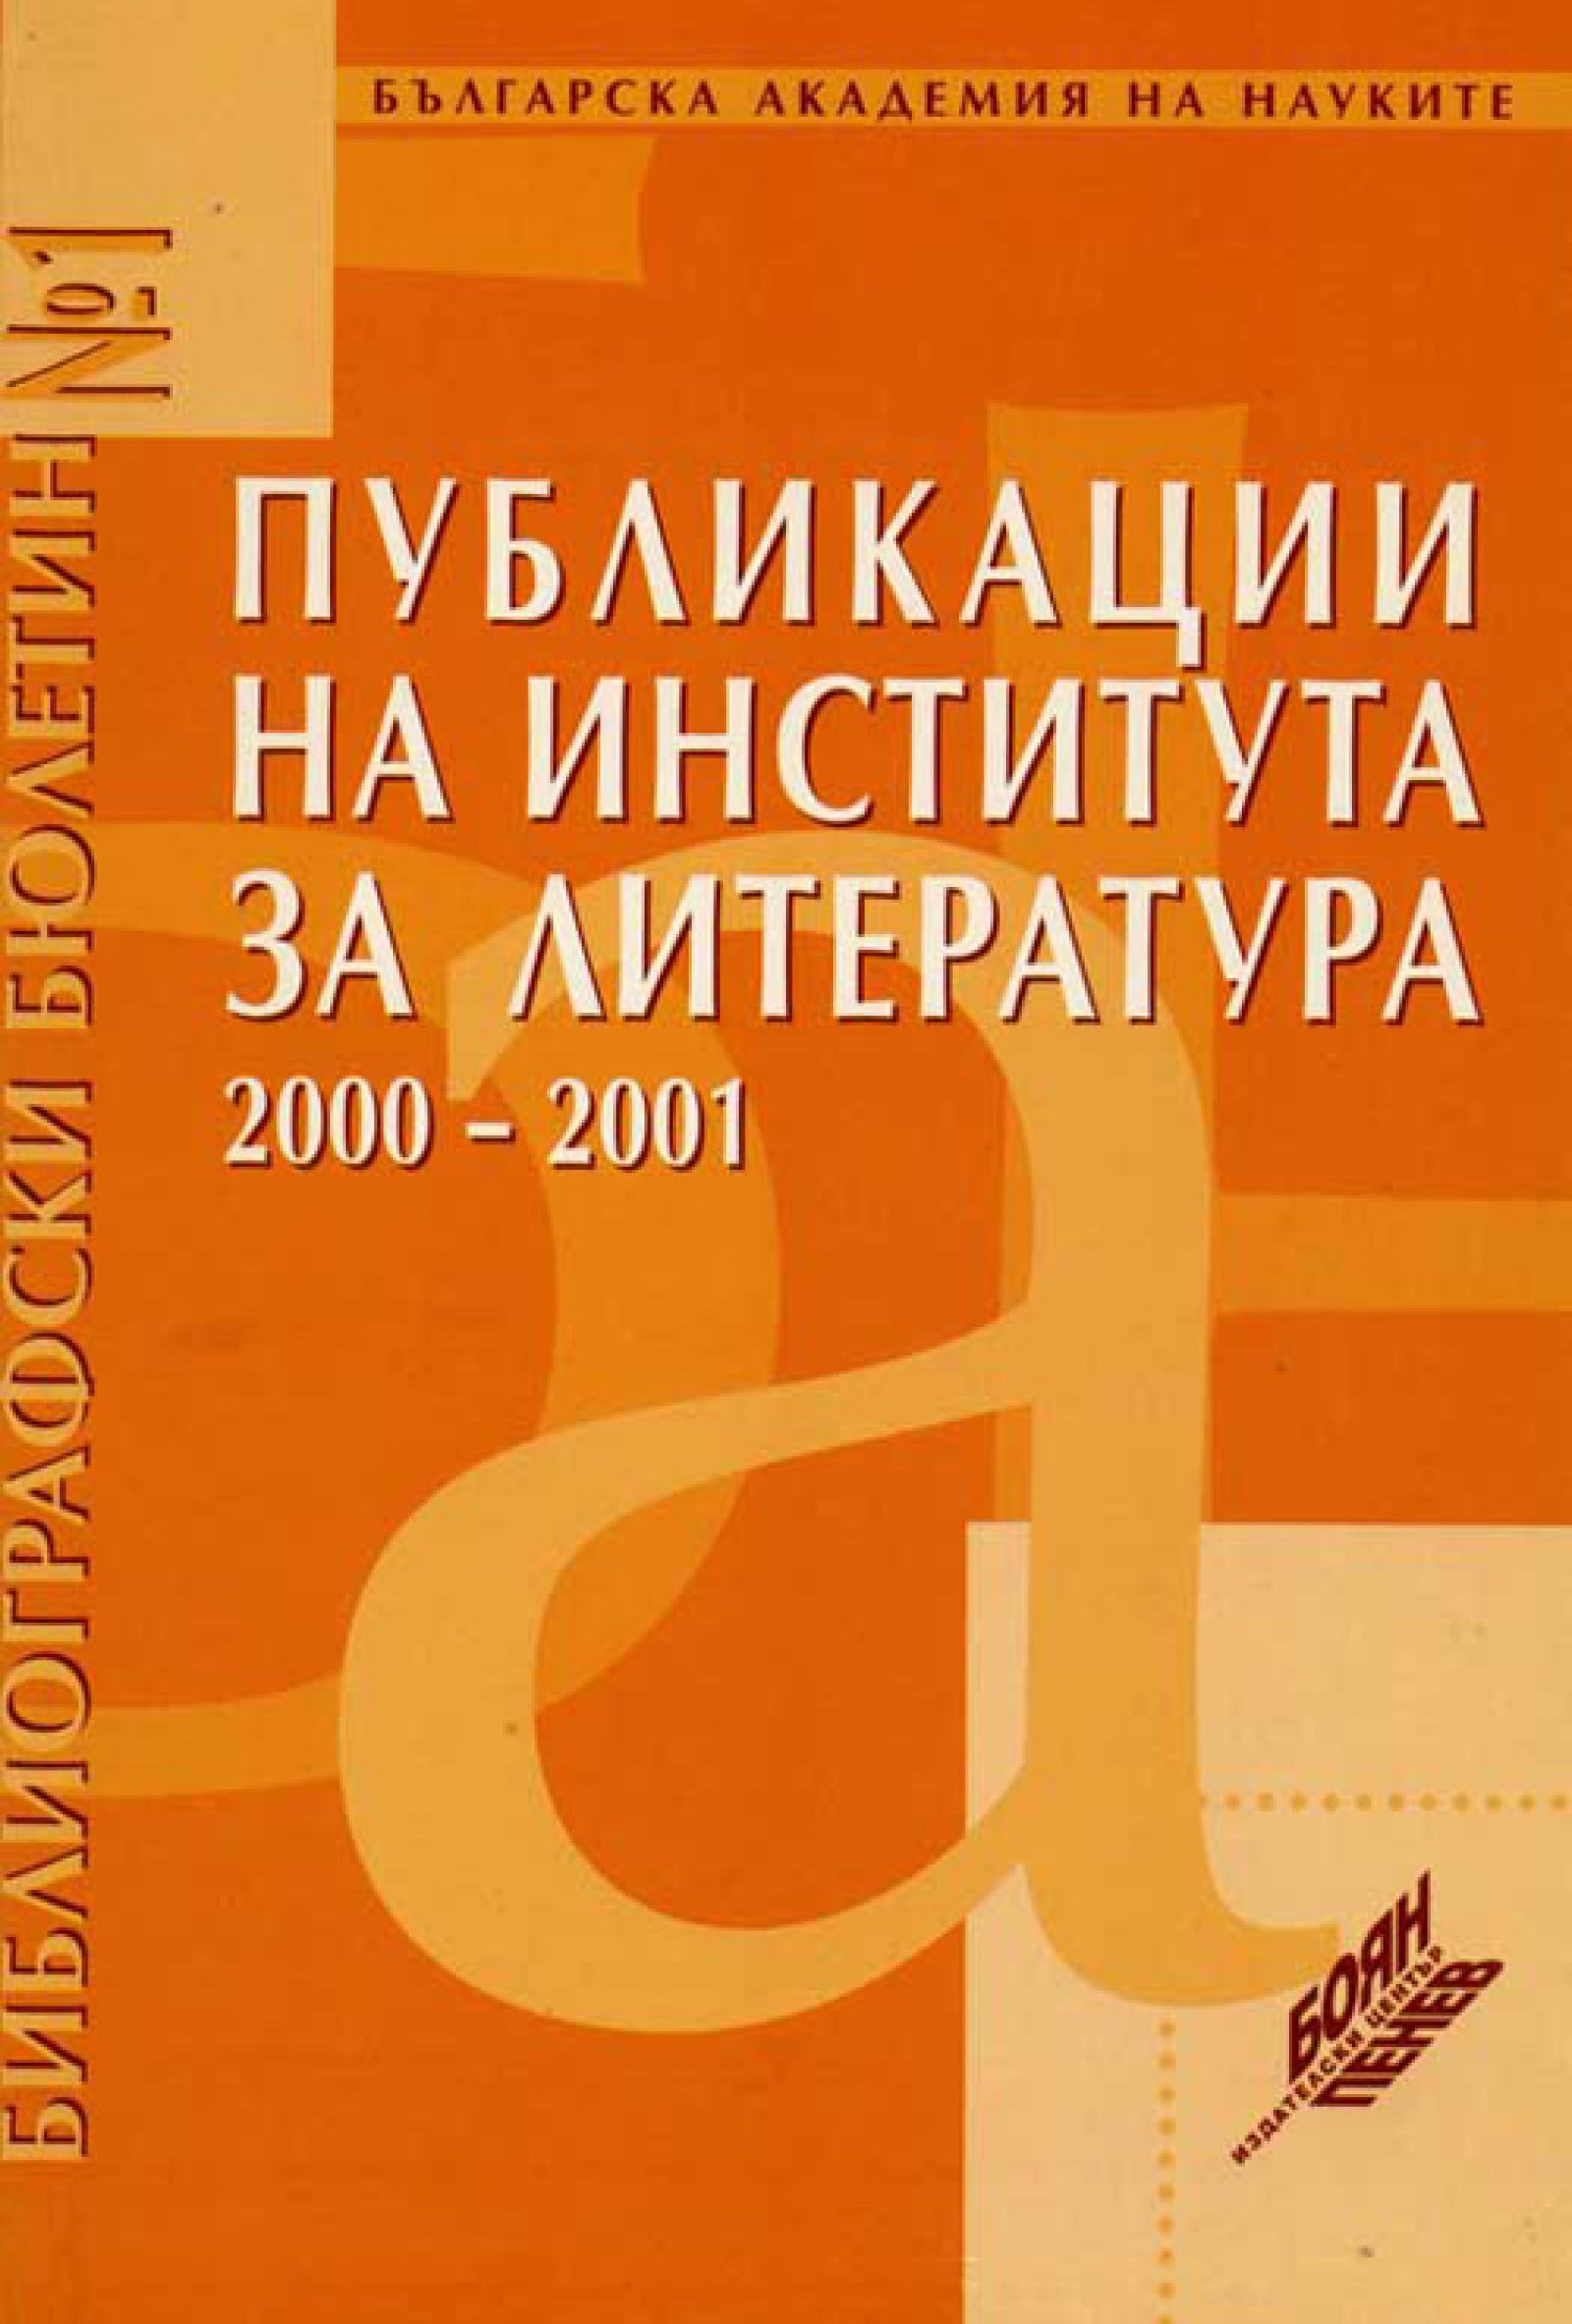 Publications_2000_2001.jpg 